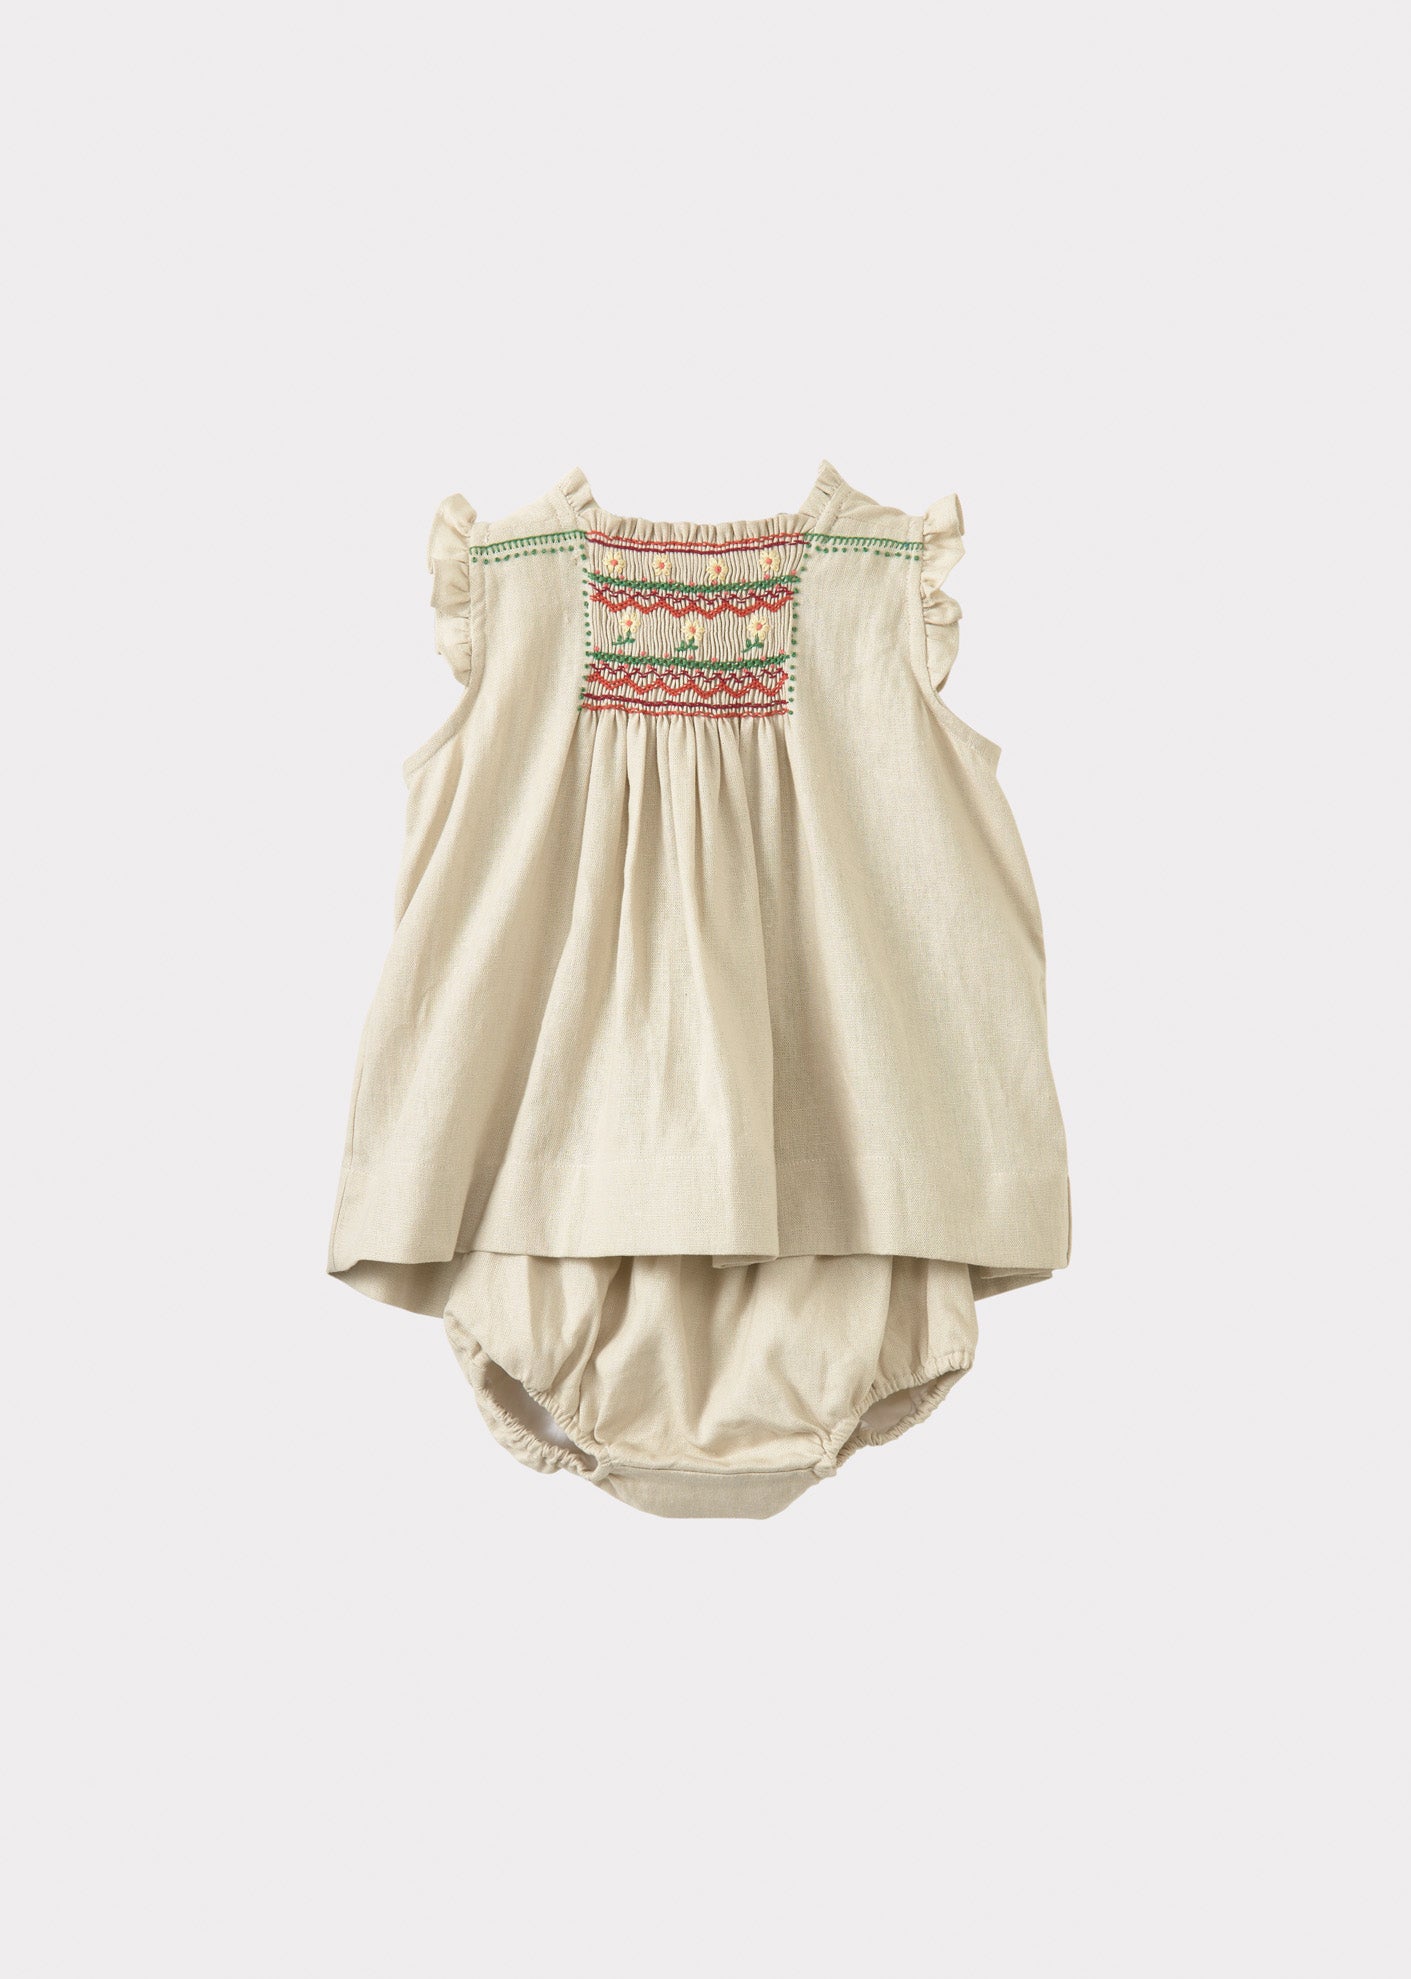 MORINGA BABY DRESS - BEIGE